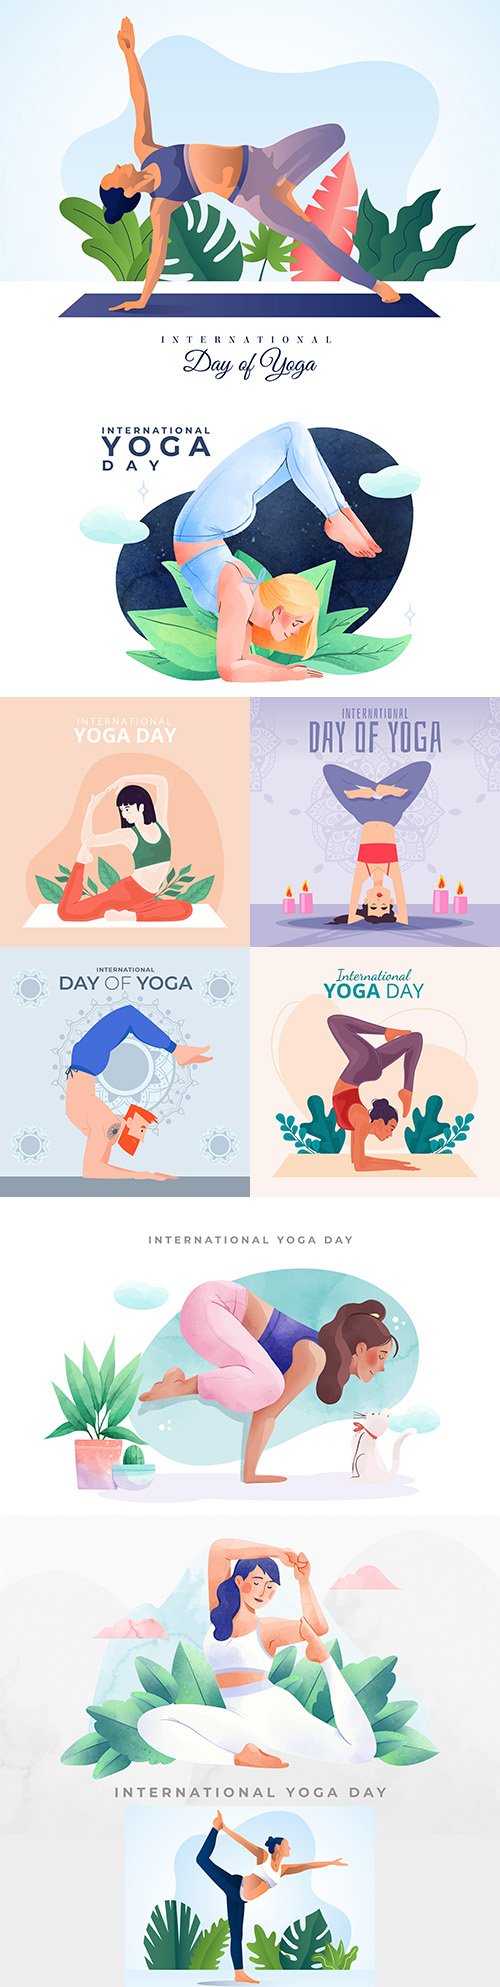 Yoga International day and meditation design illustration 3